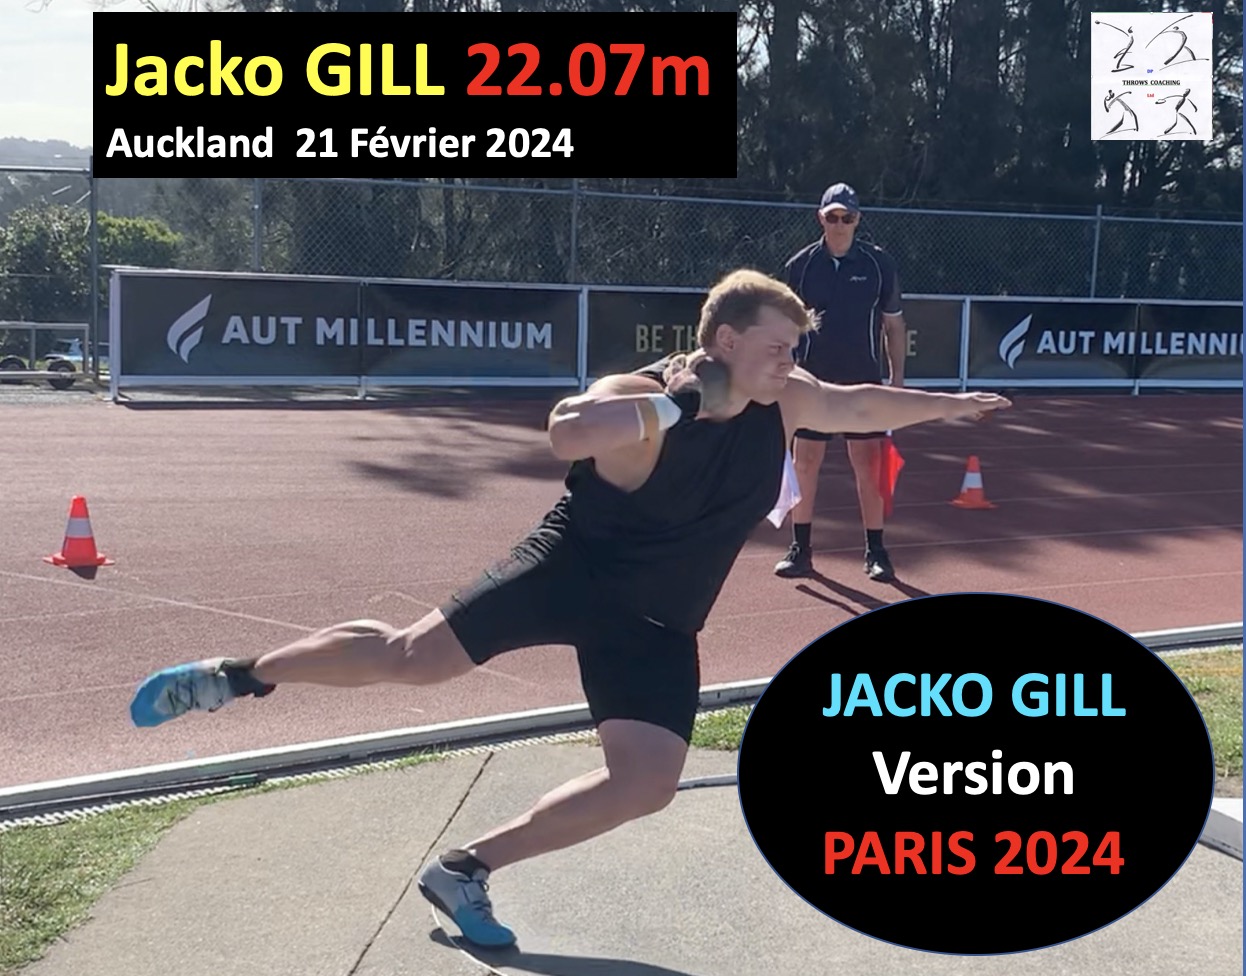 Pds 68 Jacko GILL 22.07m Version Paris Olympics 2024